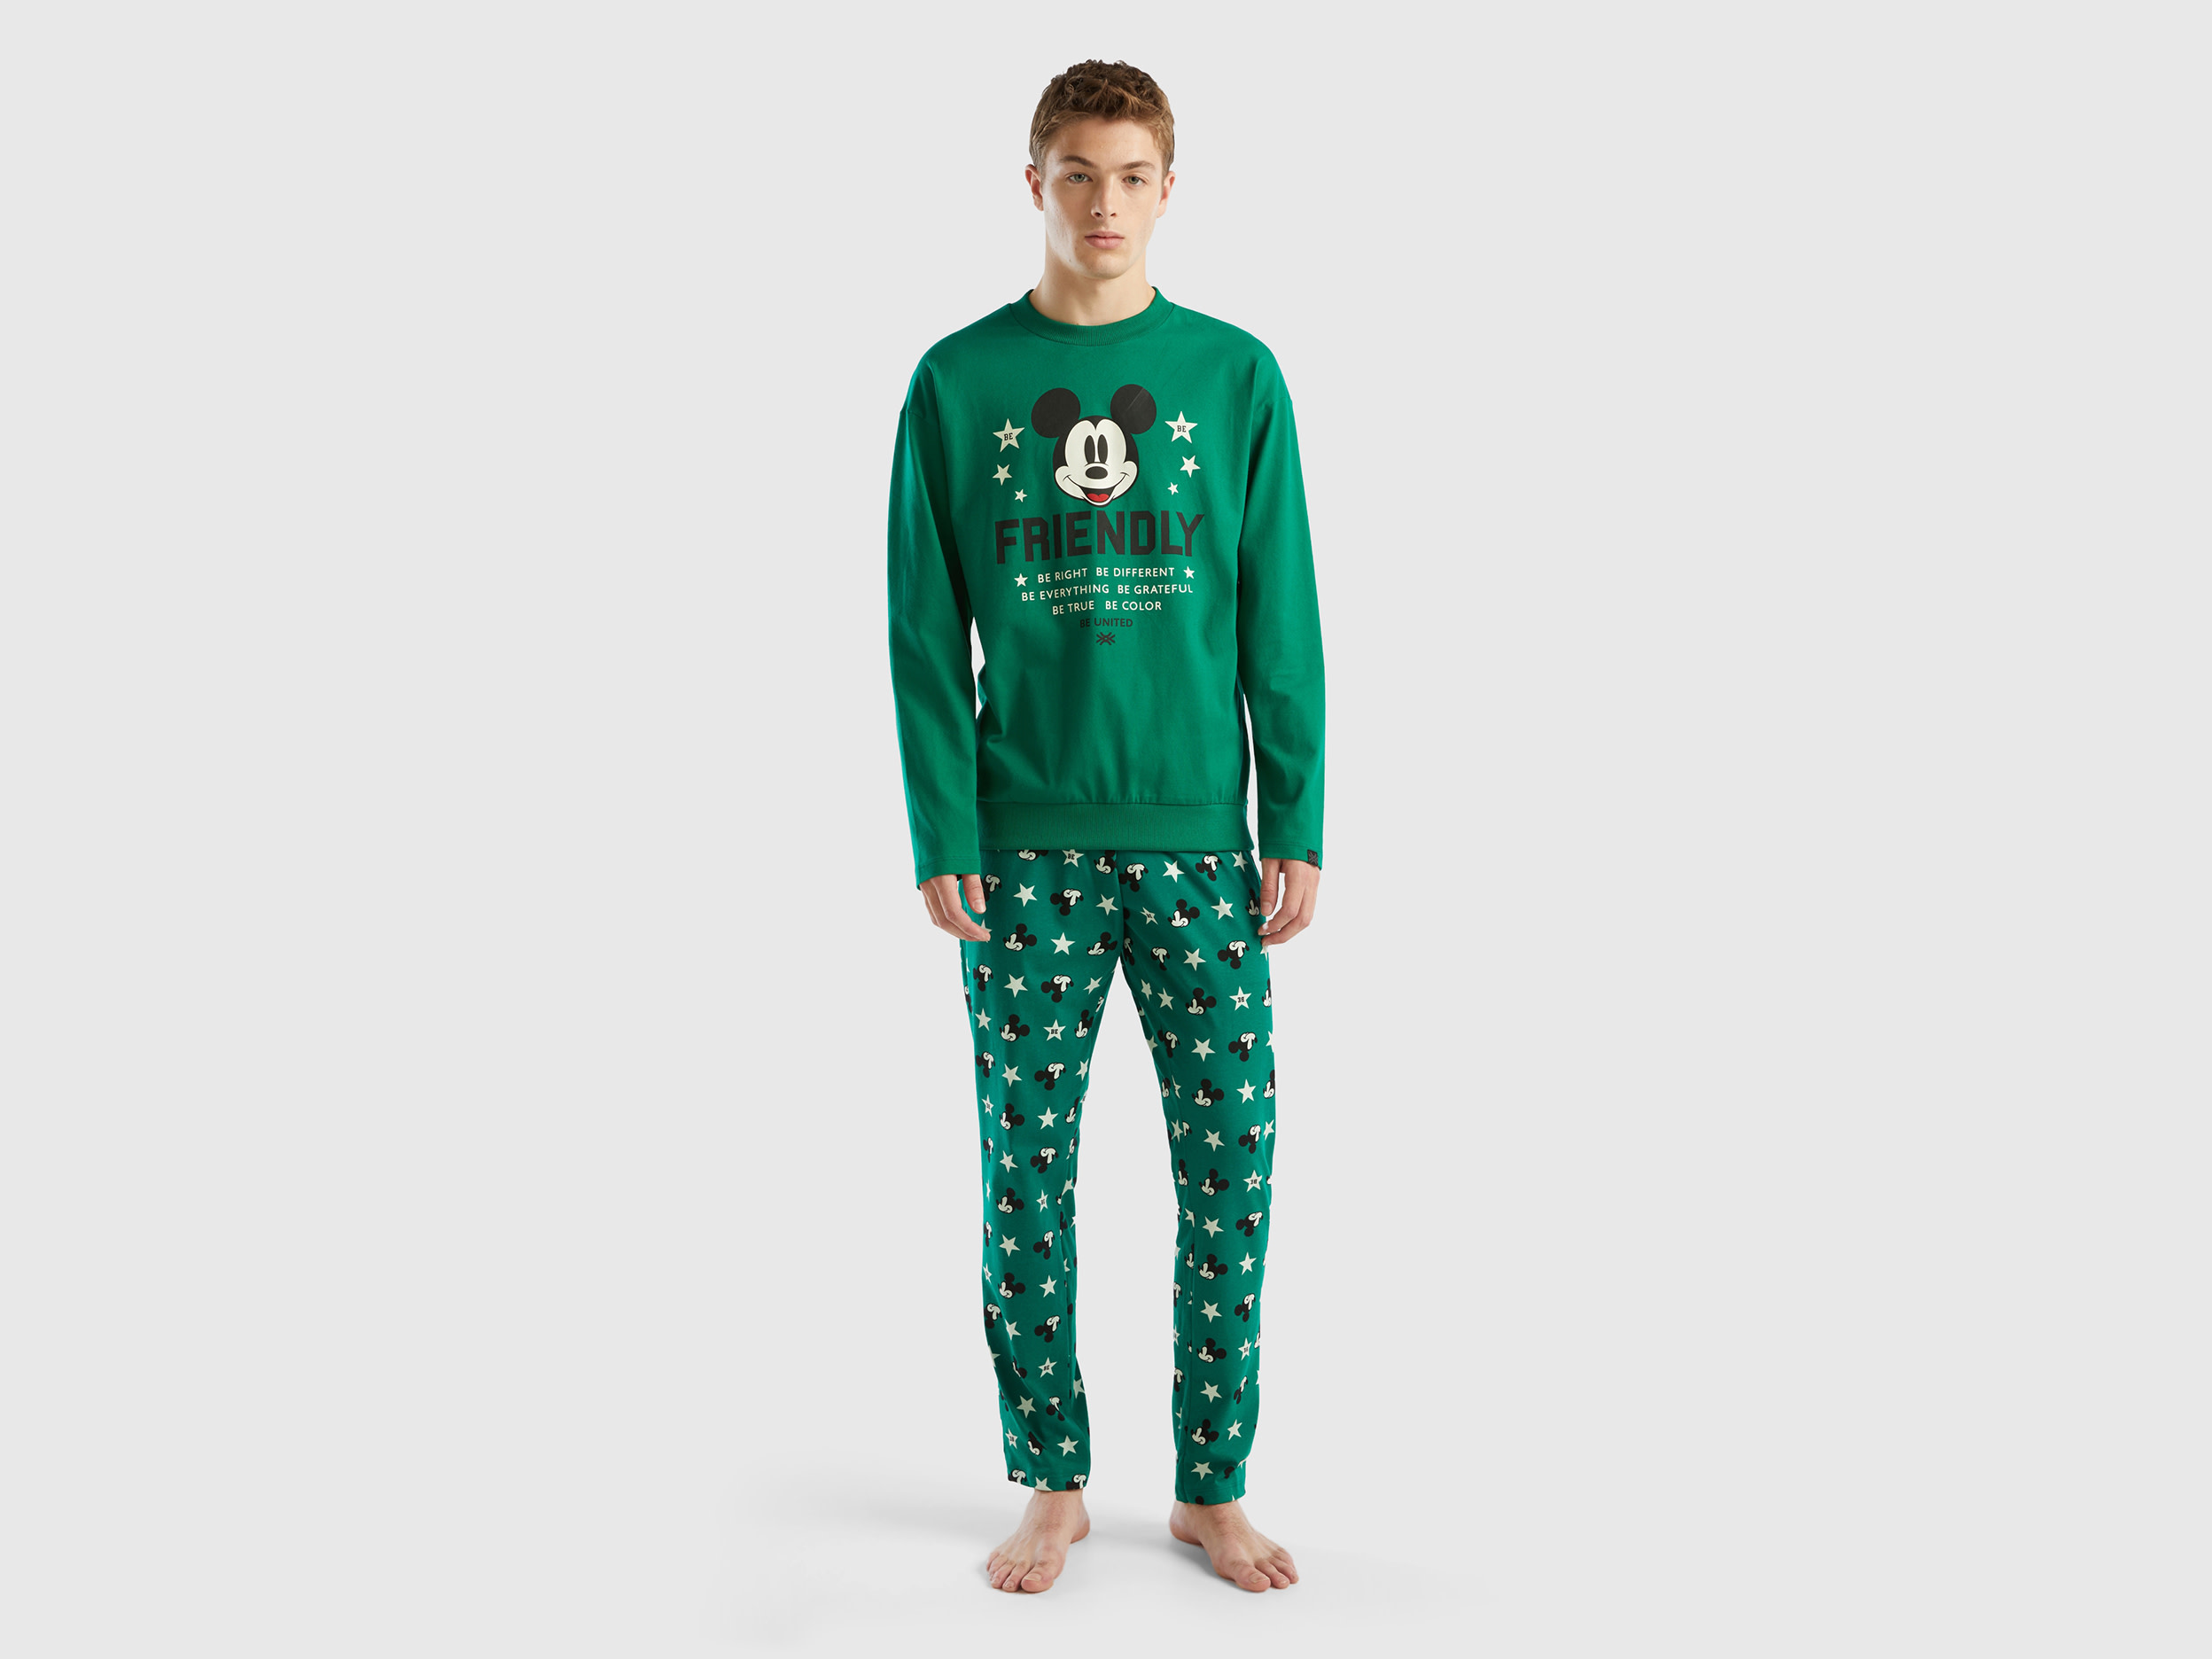 Benetton, Pyjamas With Neon Mickey Mouse Print, size S, Green, Men